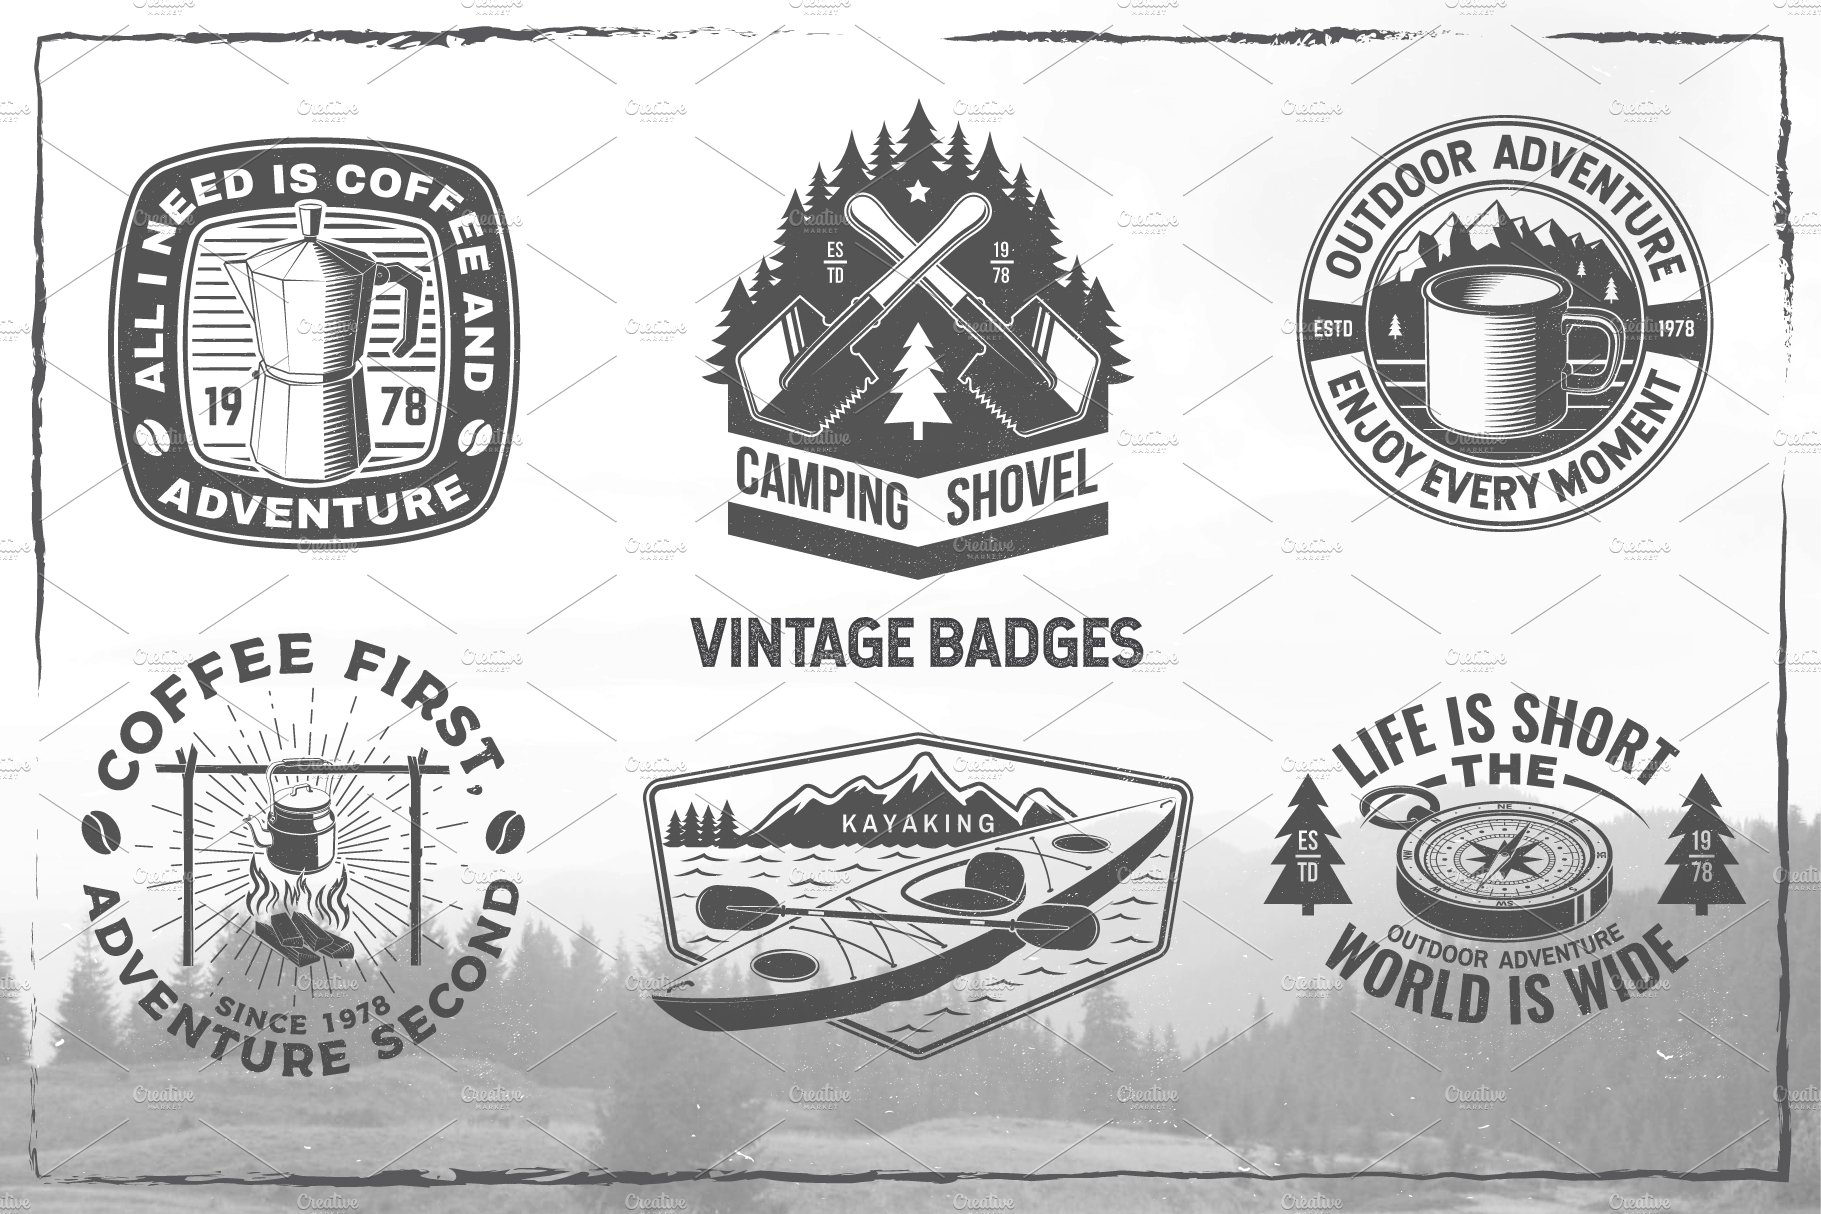 Adventure Badges + Bonus preview image.